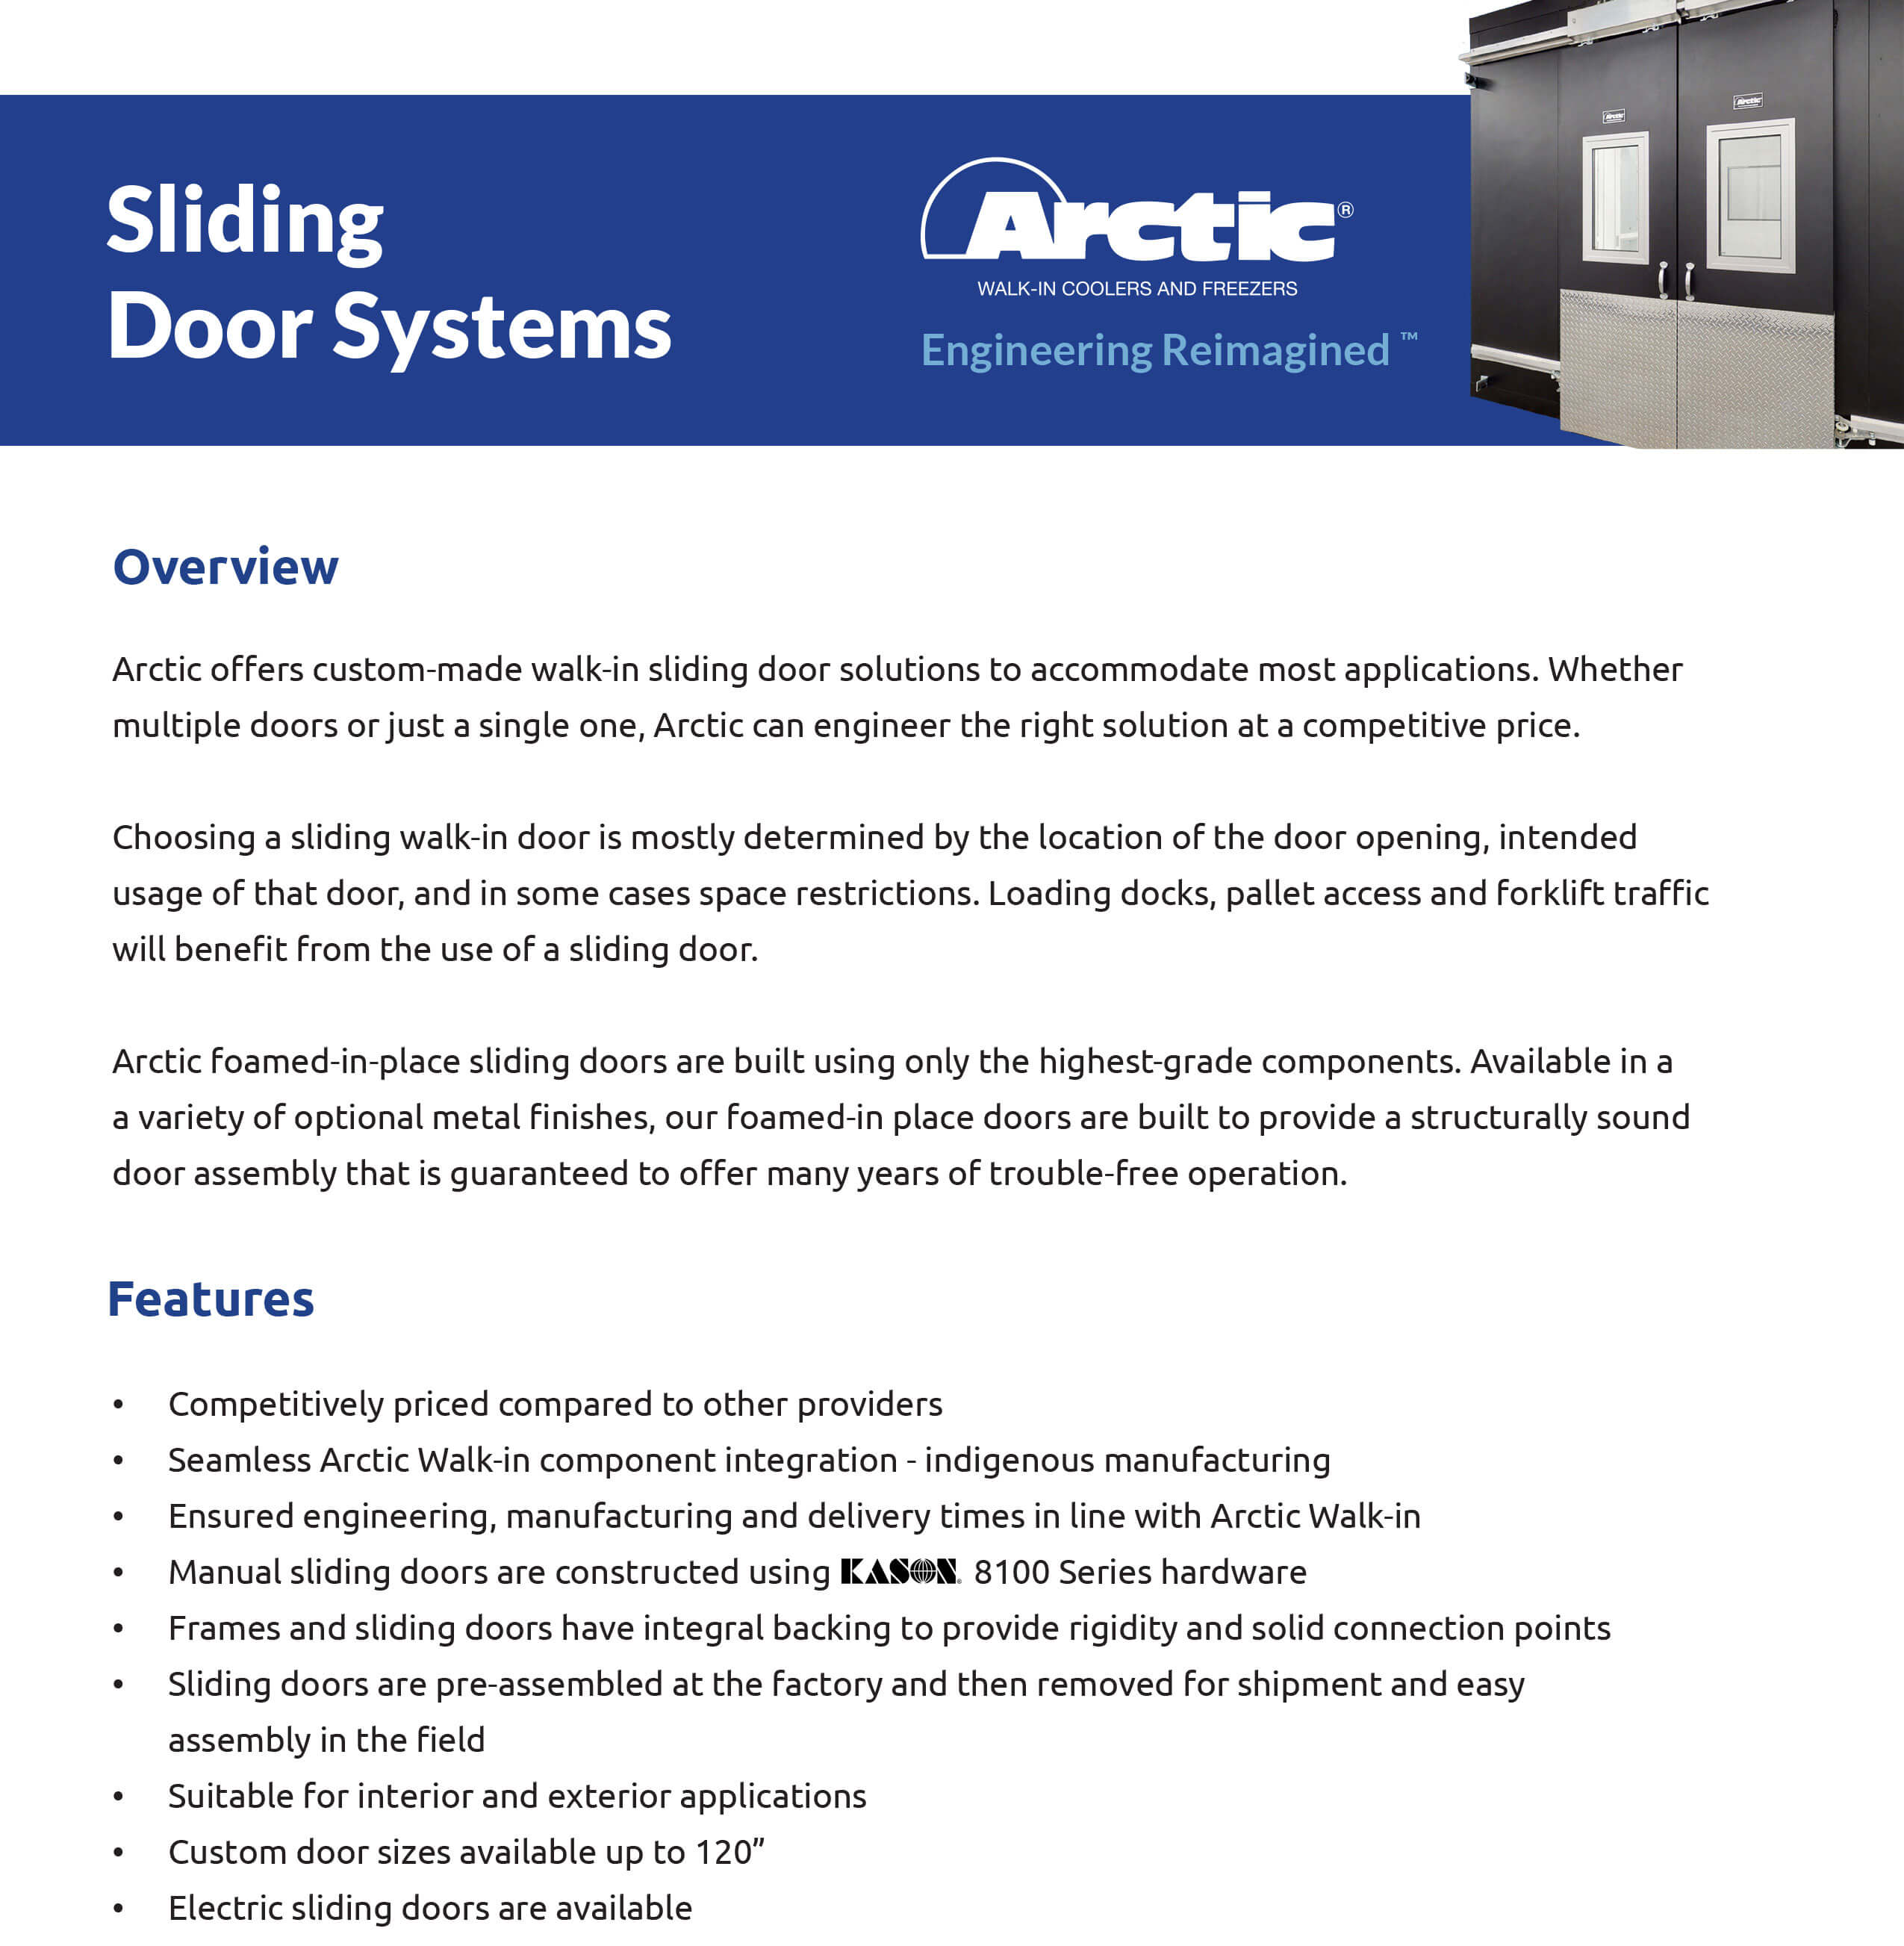 Arctic Sliding Door Systems Image 1